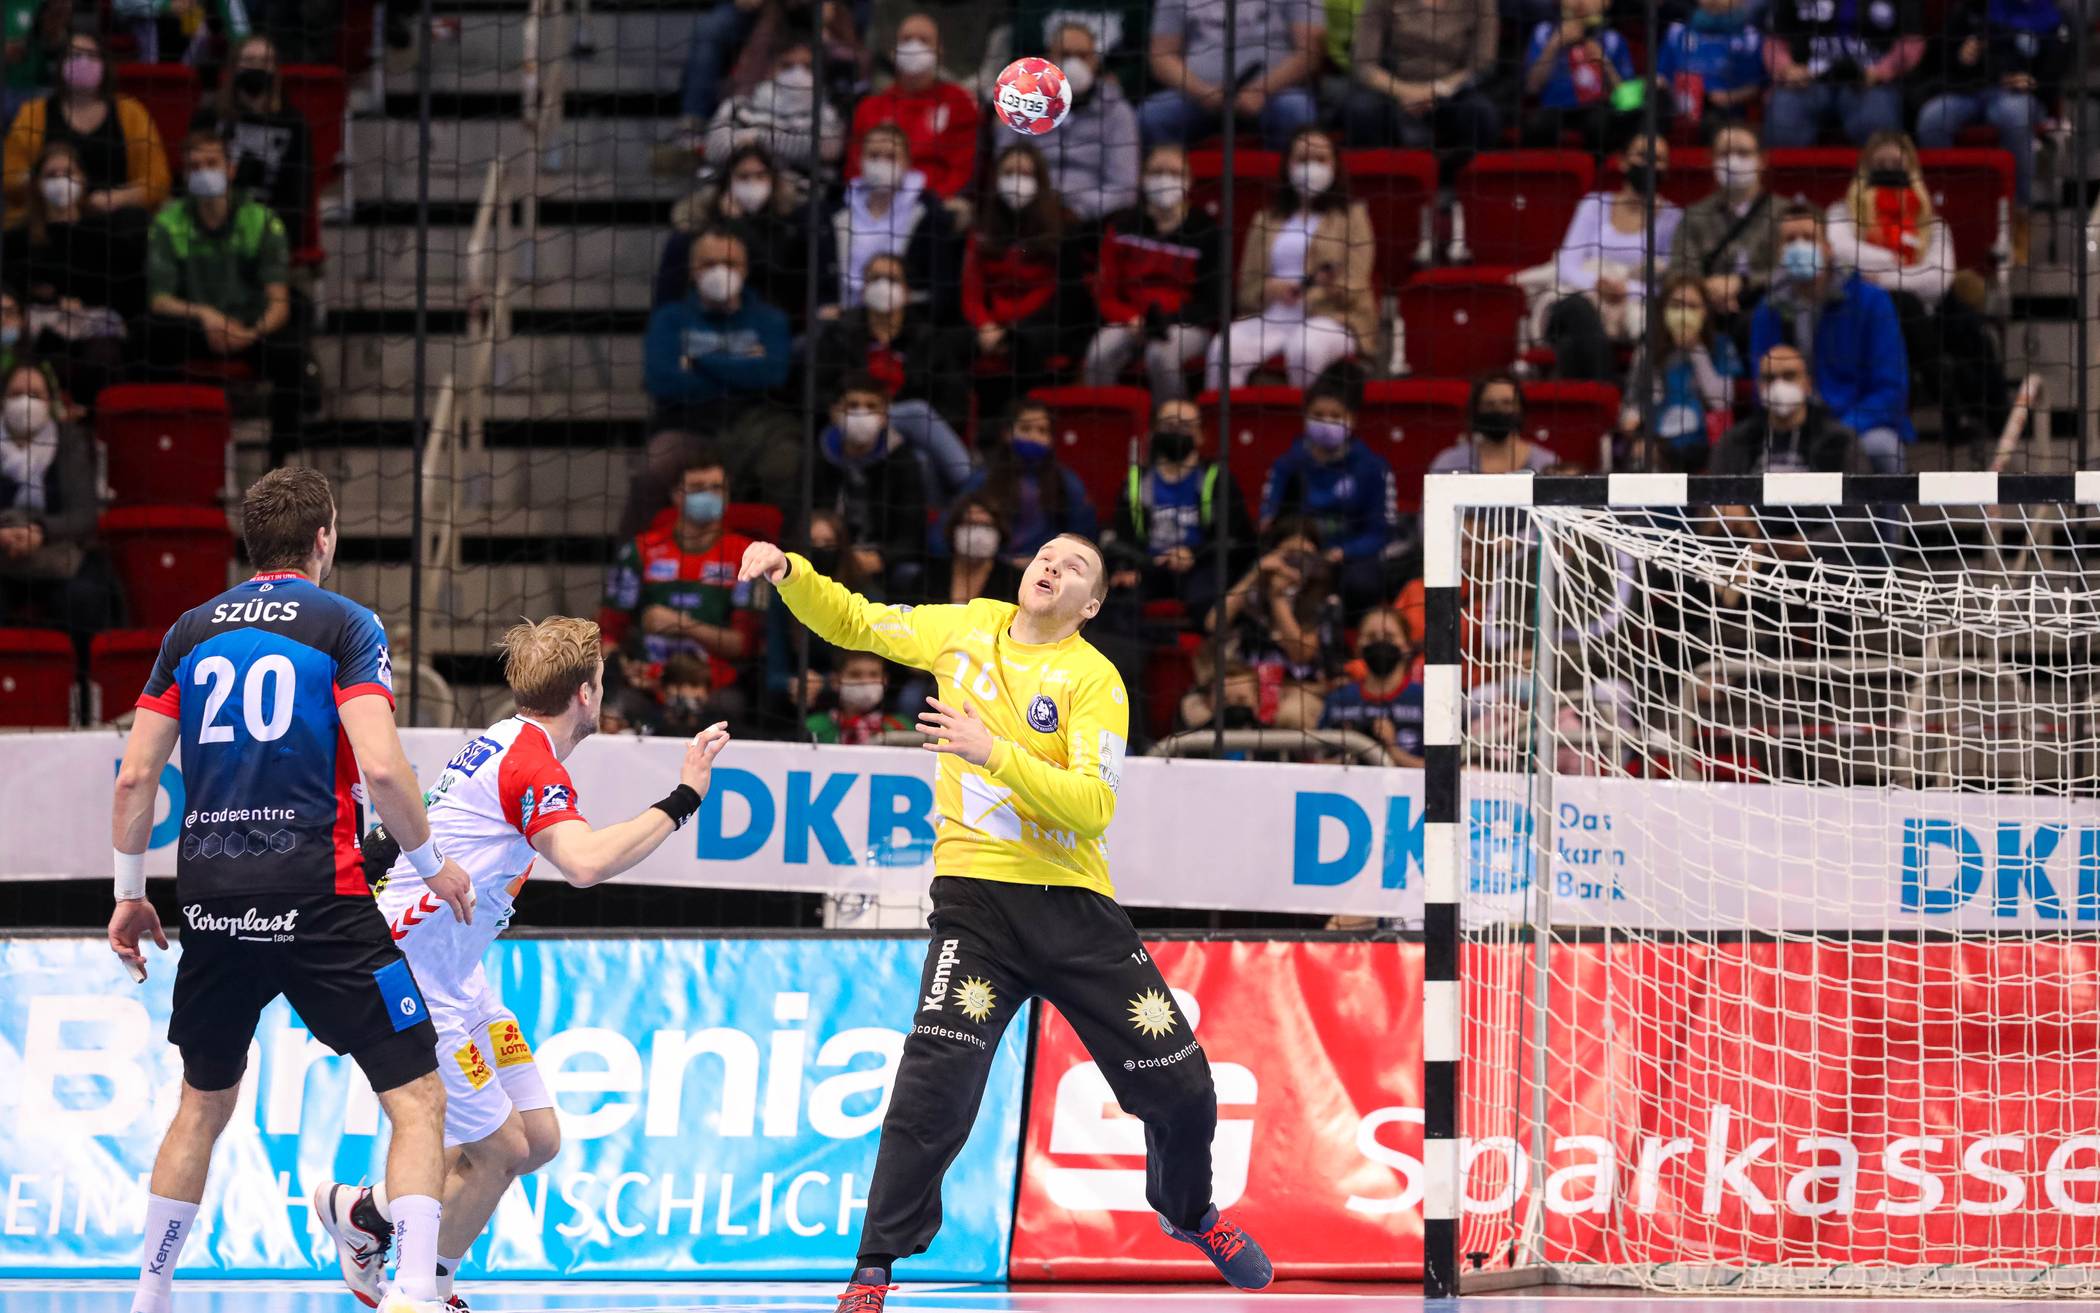  Die Handball-Bundesliga gastiert im Düsseldorfer PSD Bank Dome. 